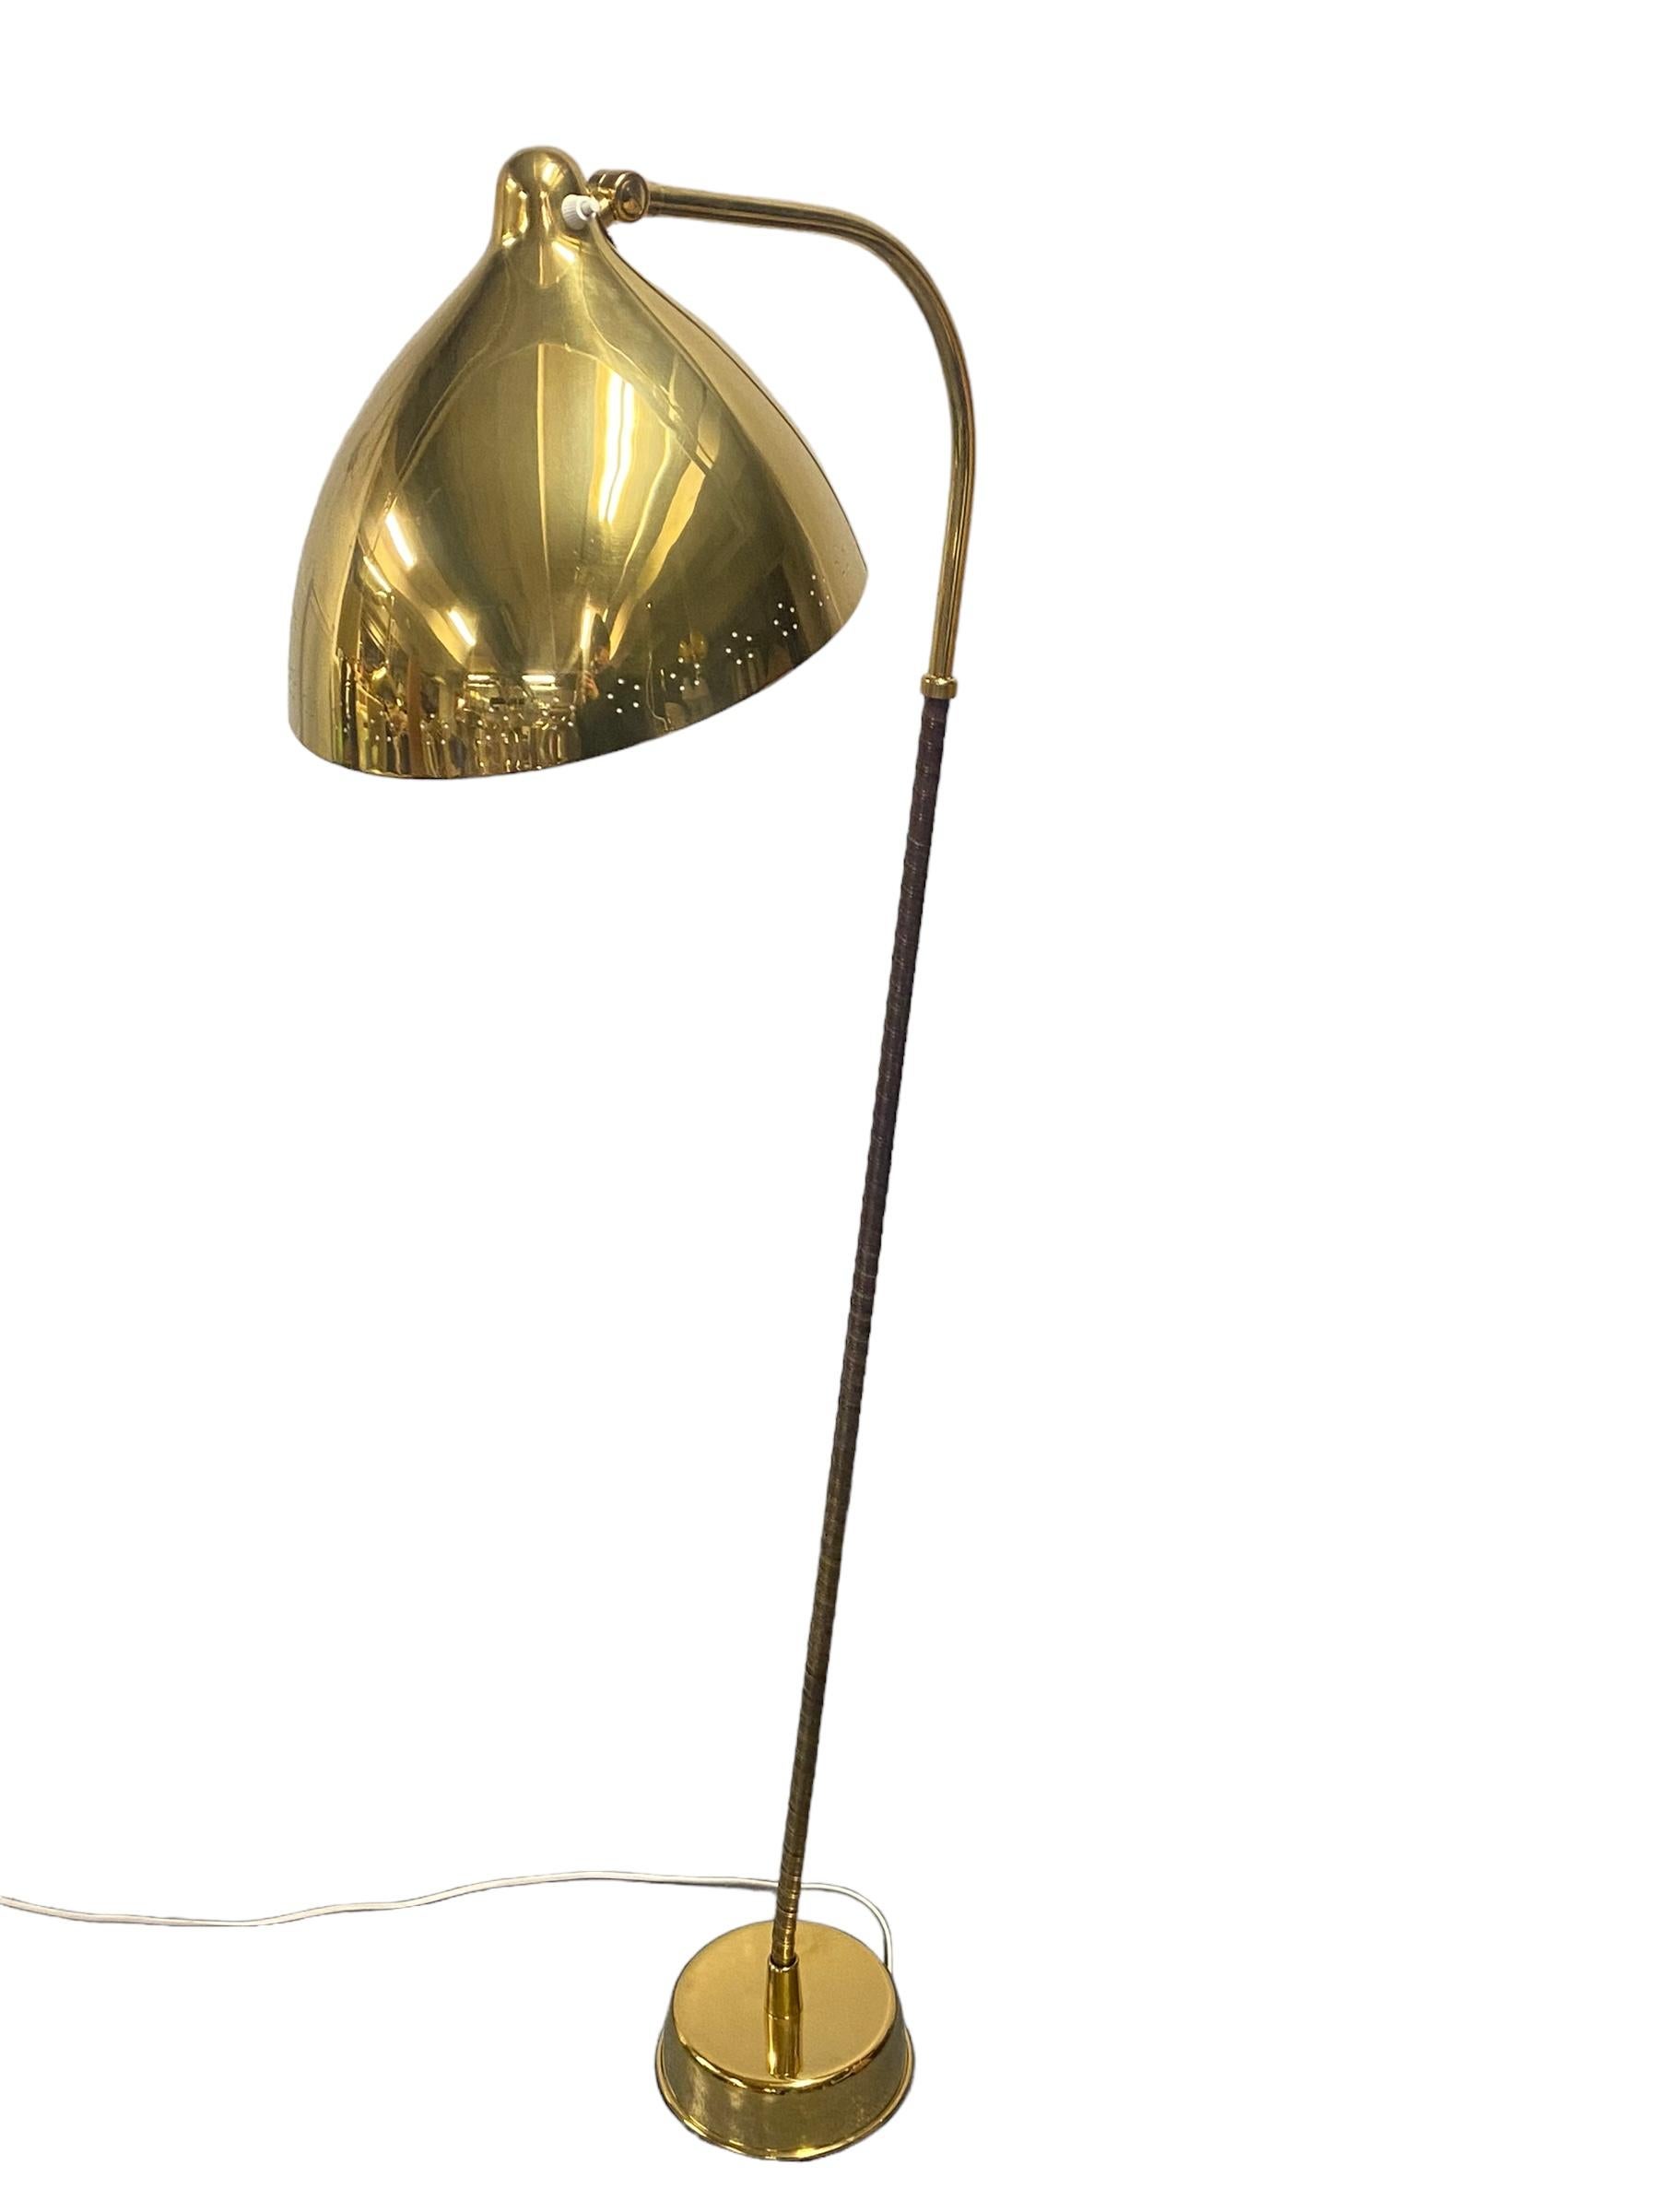 Mid-20th Century Lisa Johansson-Pape, Floor lamp model 30-062, Orno For Sale